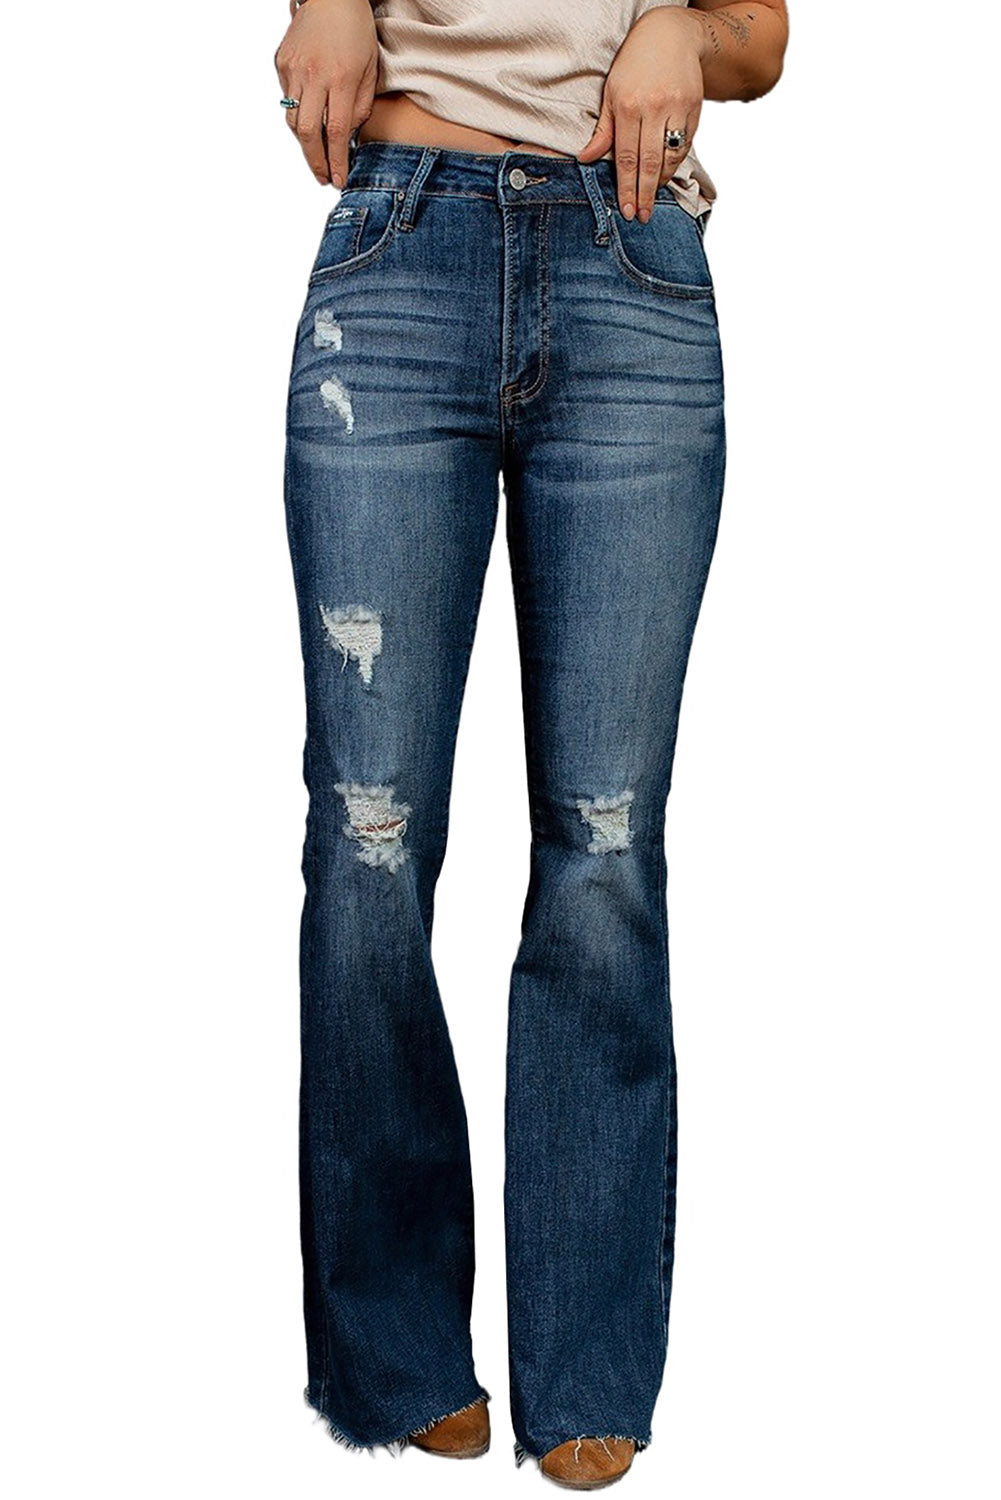 Himmelblaue, mittelhohe Flare-Jeans in dunkler Waschung